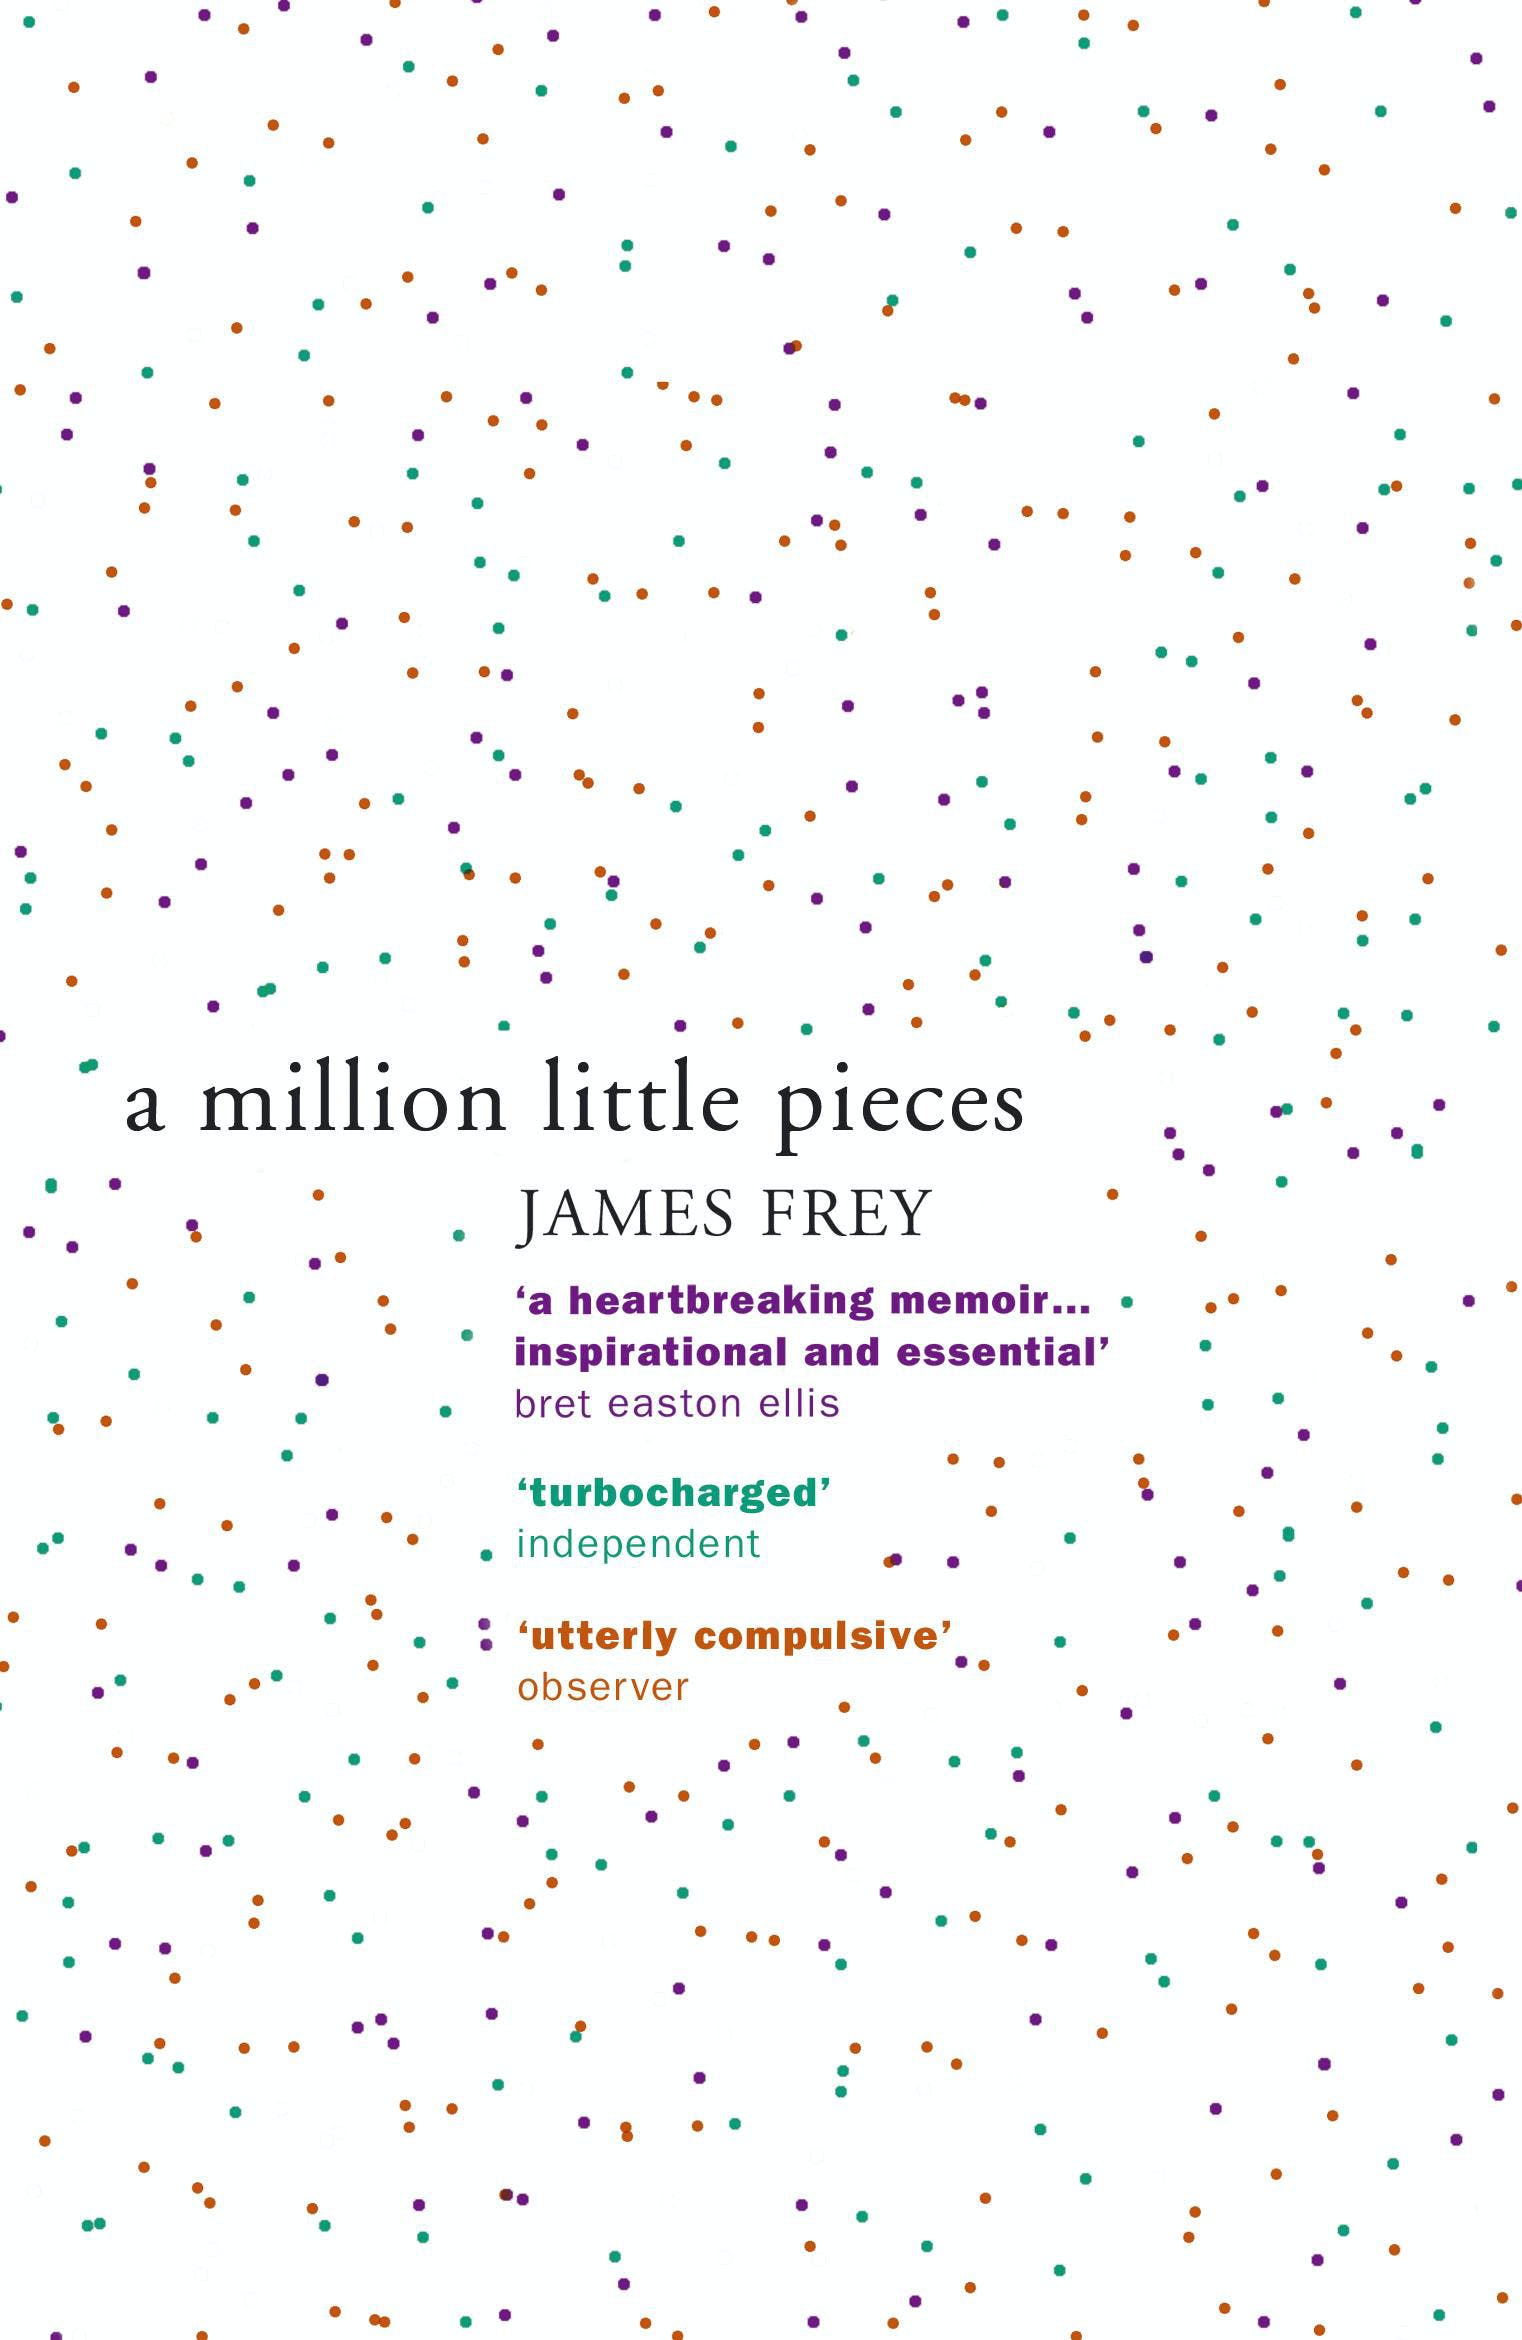 A MILLION LITTLE PIECES BY JAMES FREY